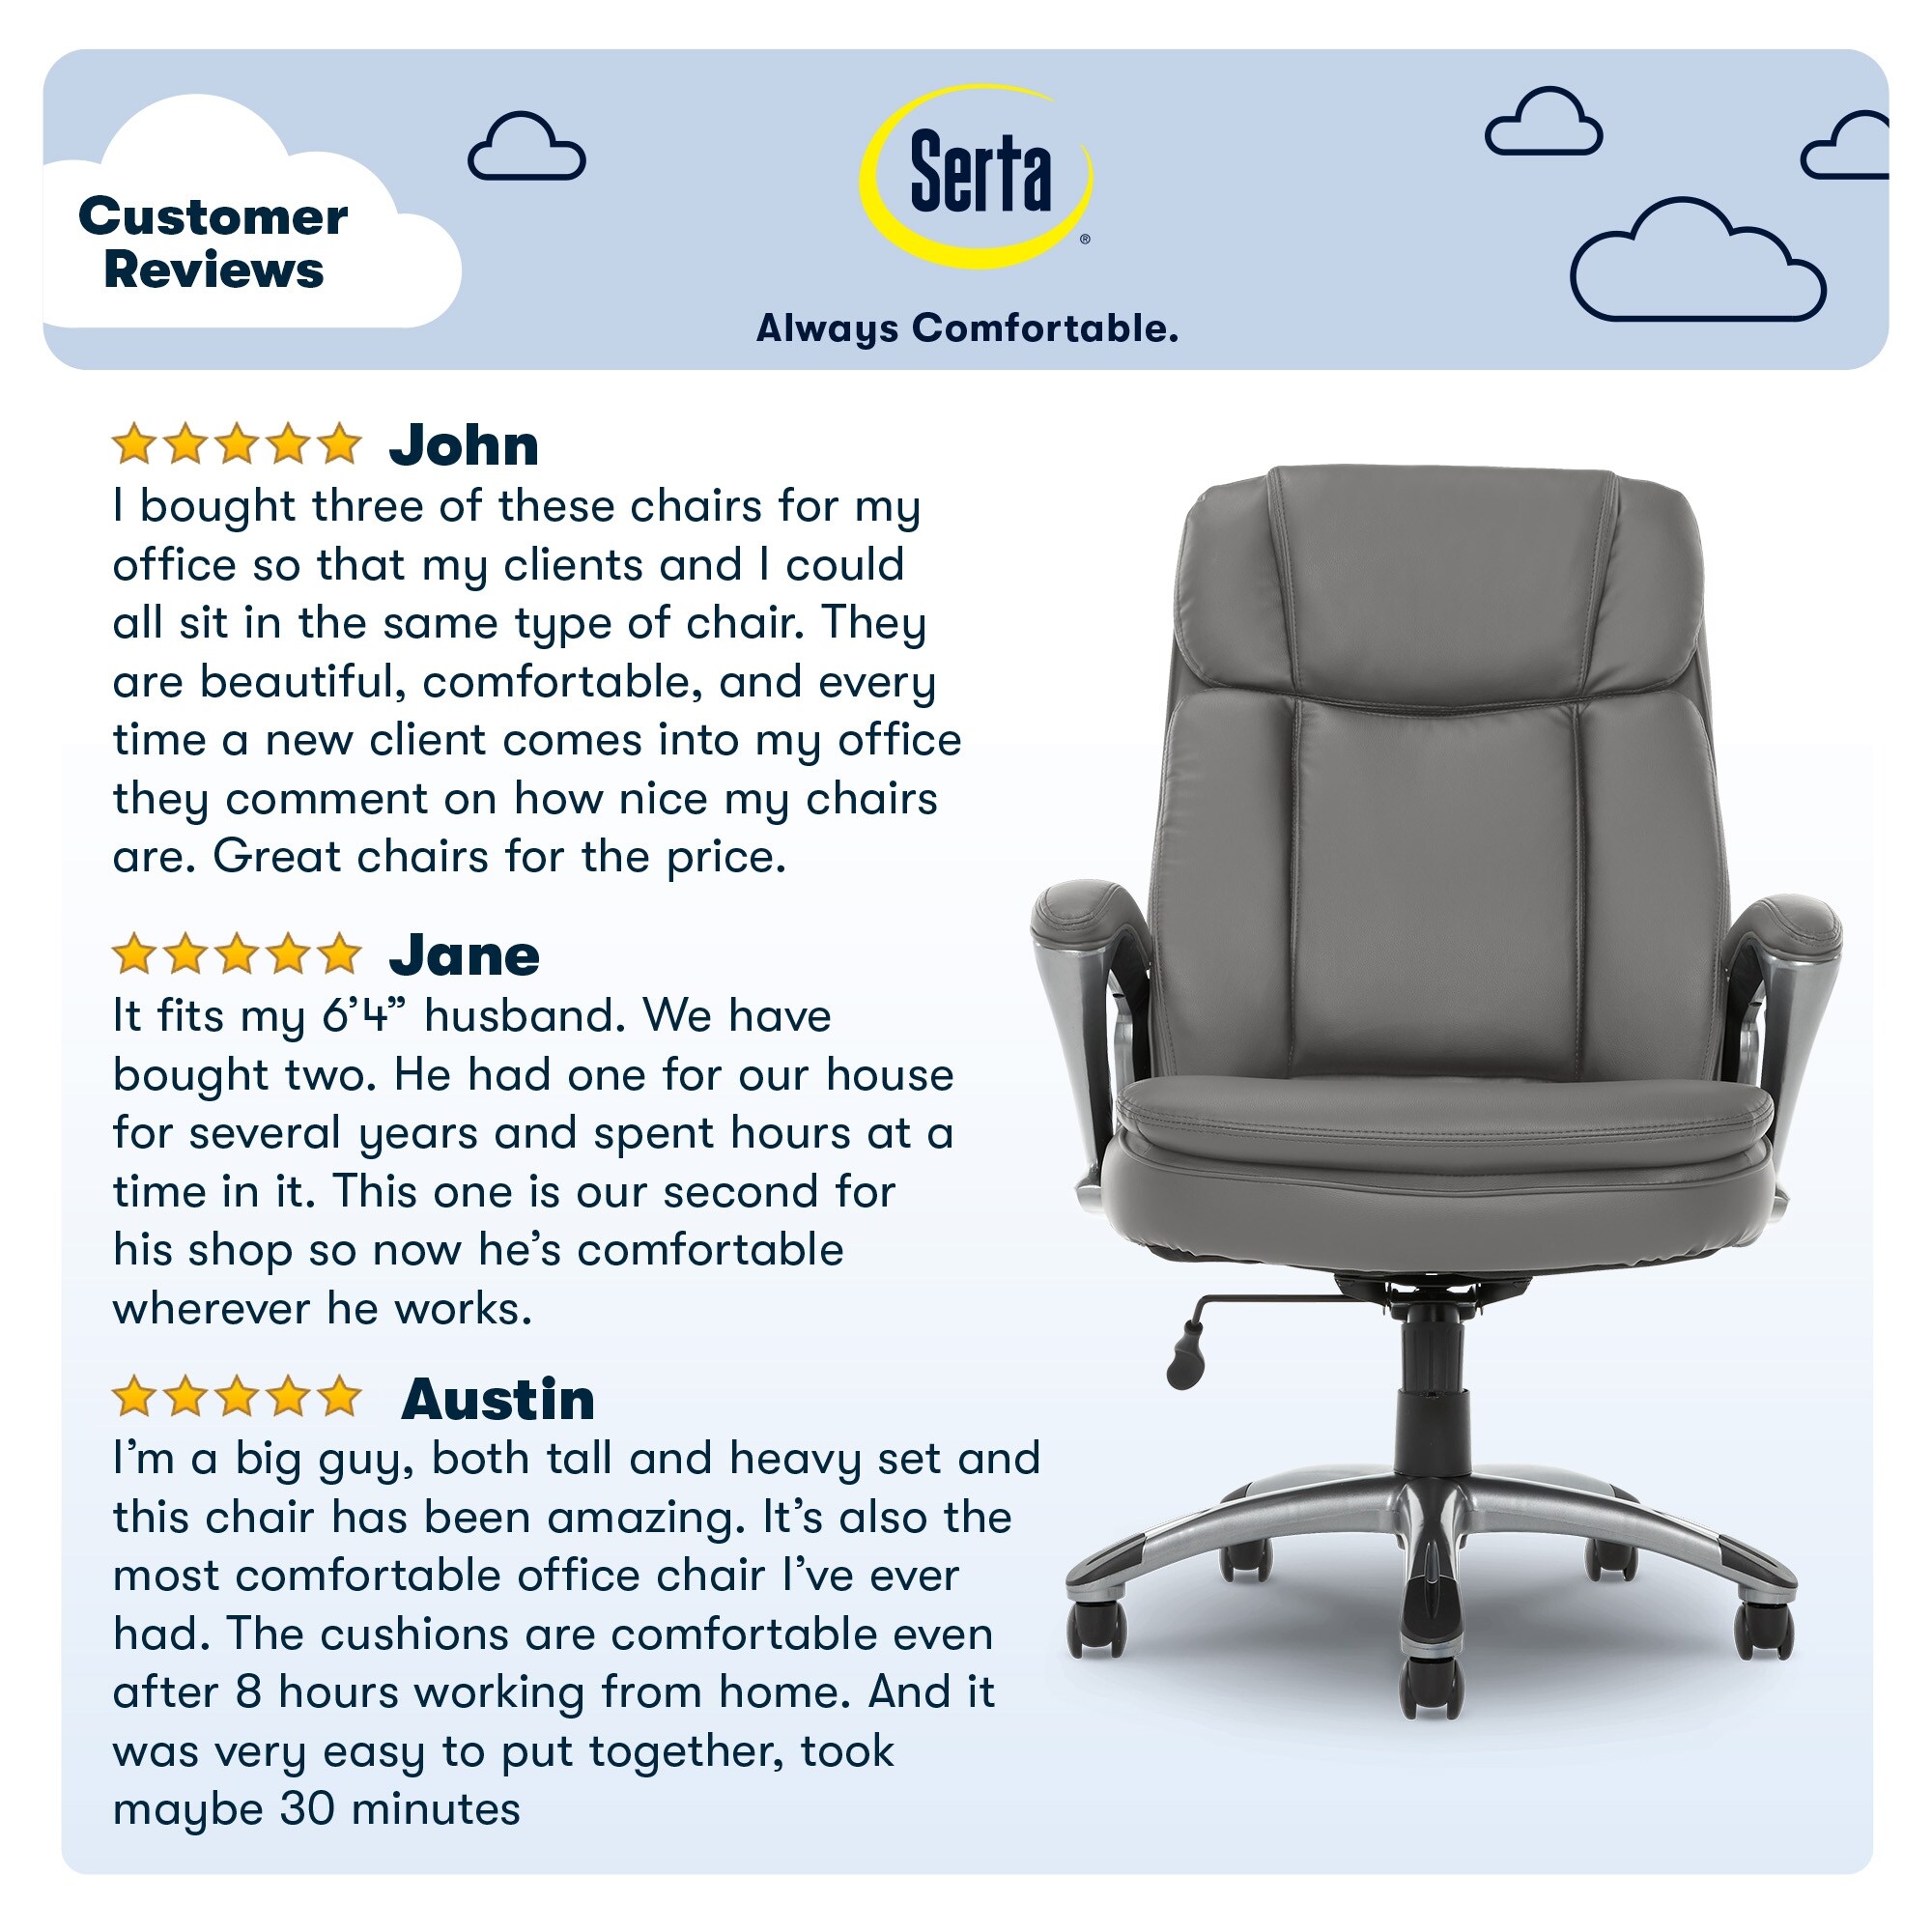 Serta Hannah Microfiber Office Chair with Headrest Pillow Charcoal Gray